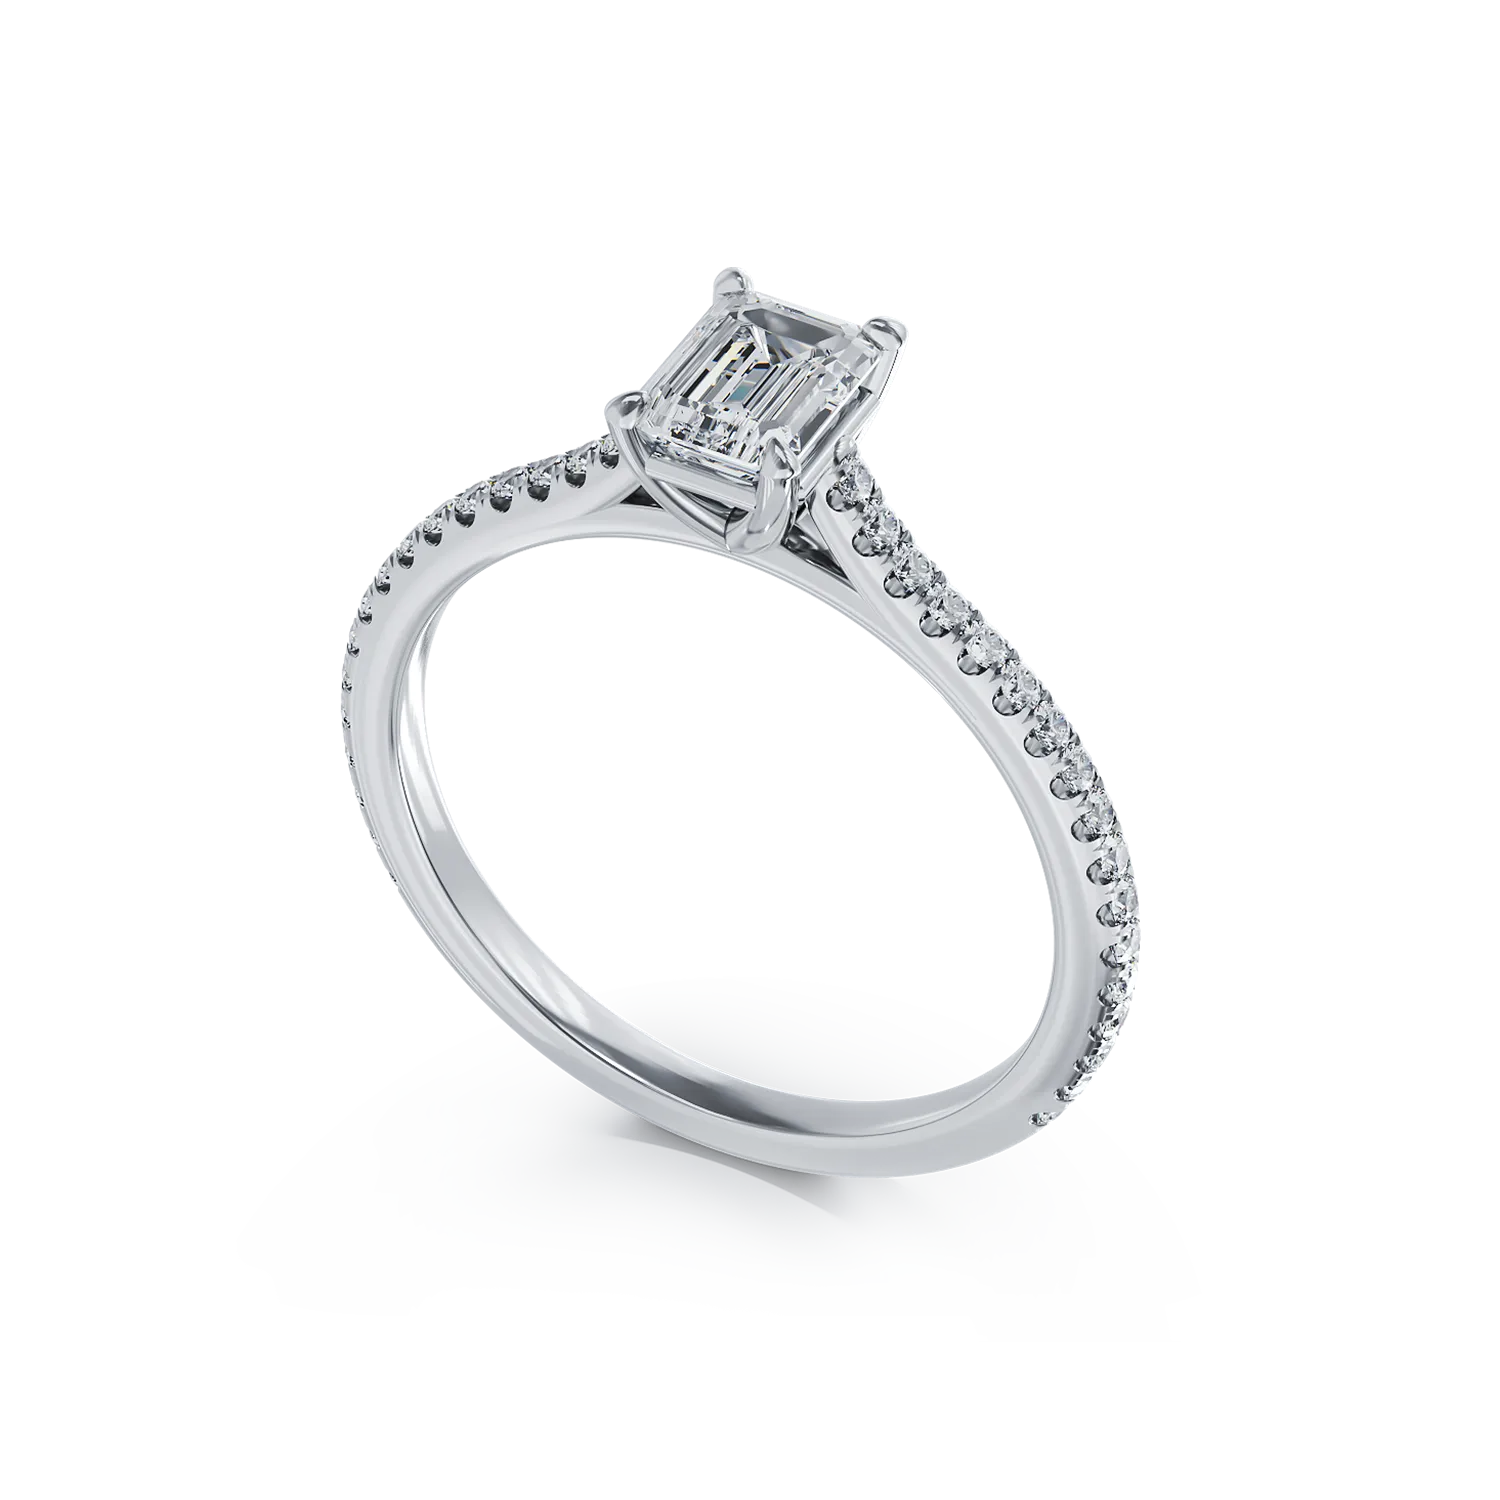 Platinum engagement ring with 0.5ct diamond and 0.2ct diamonds